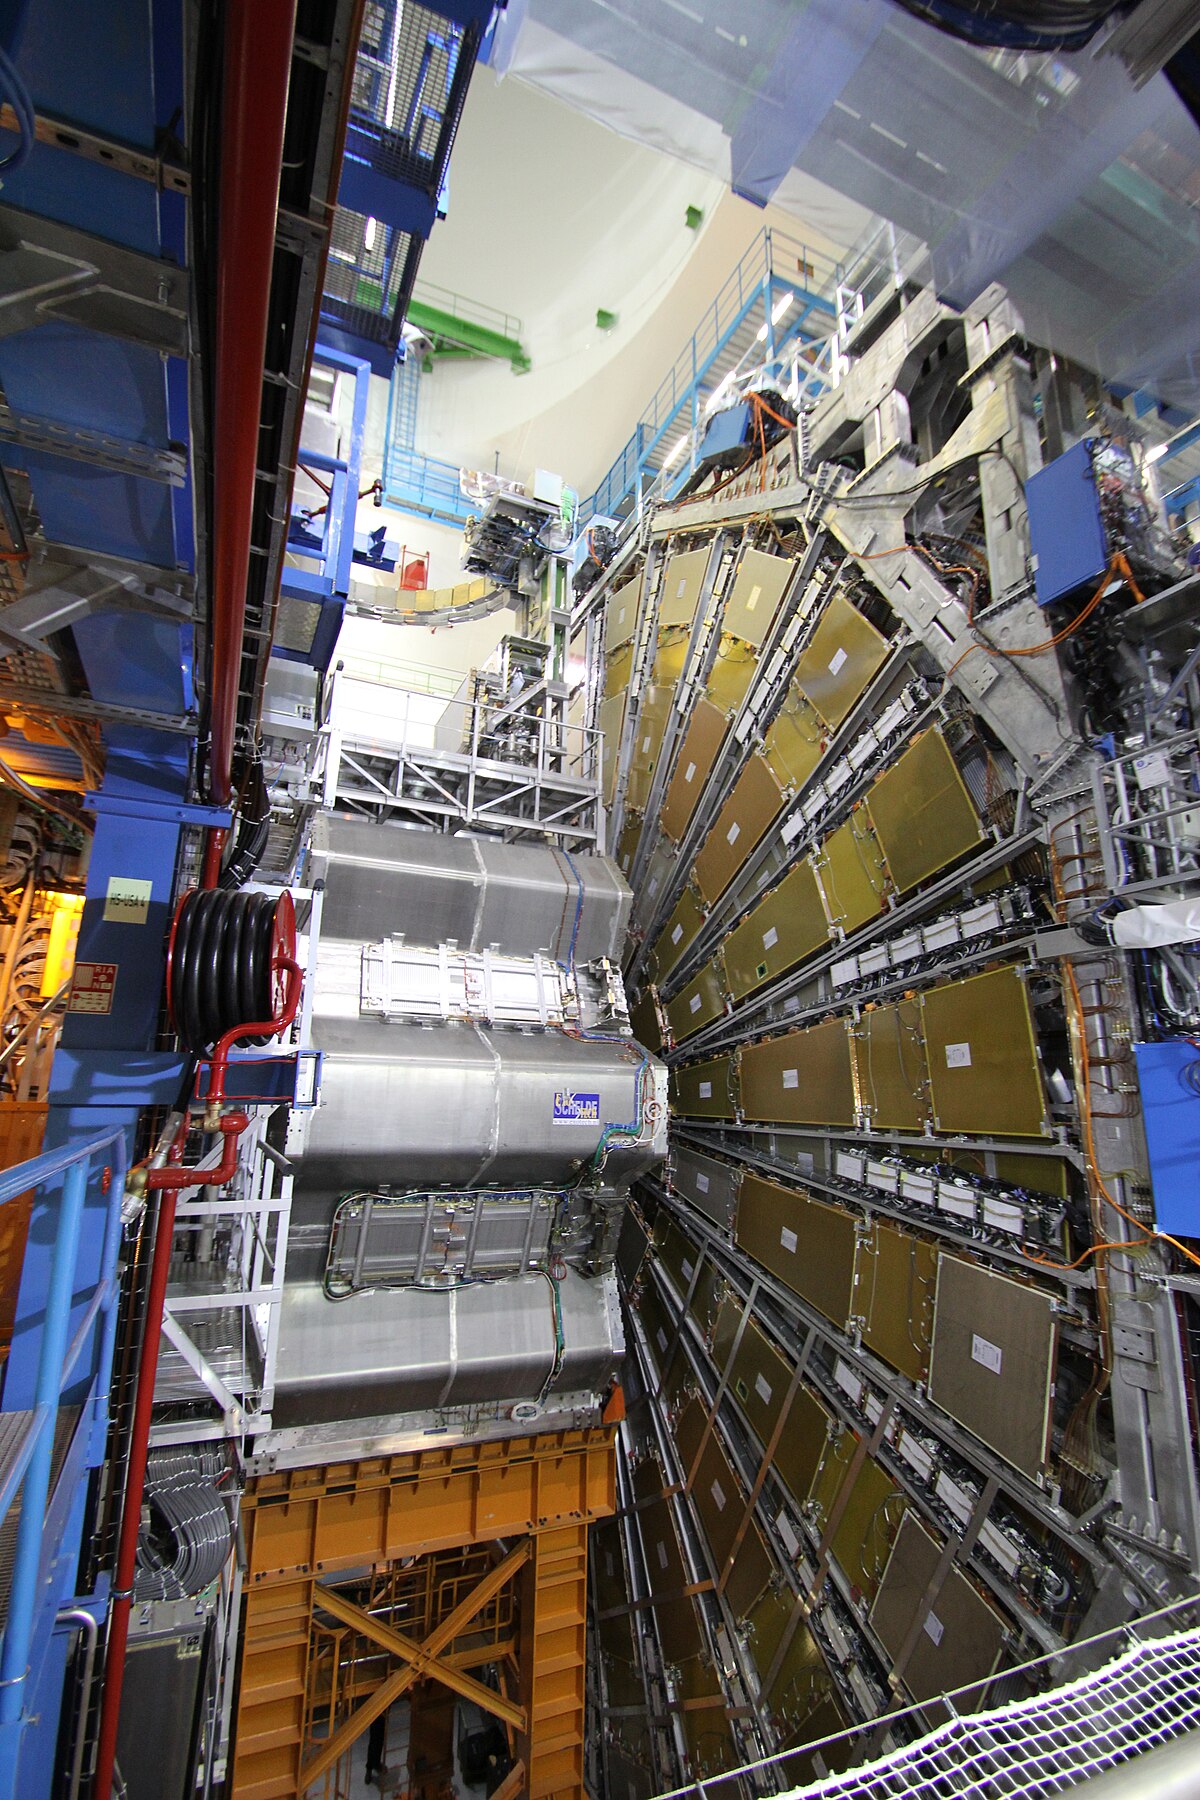 File:CERN, Geneva, particle accelerator (16099420909).jpg - Wikimedia Commons